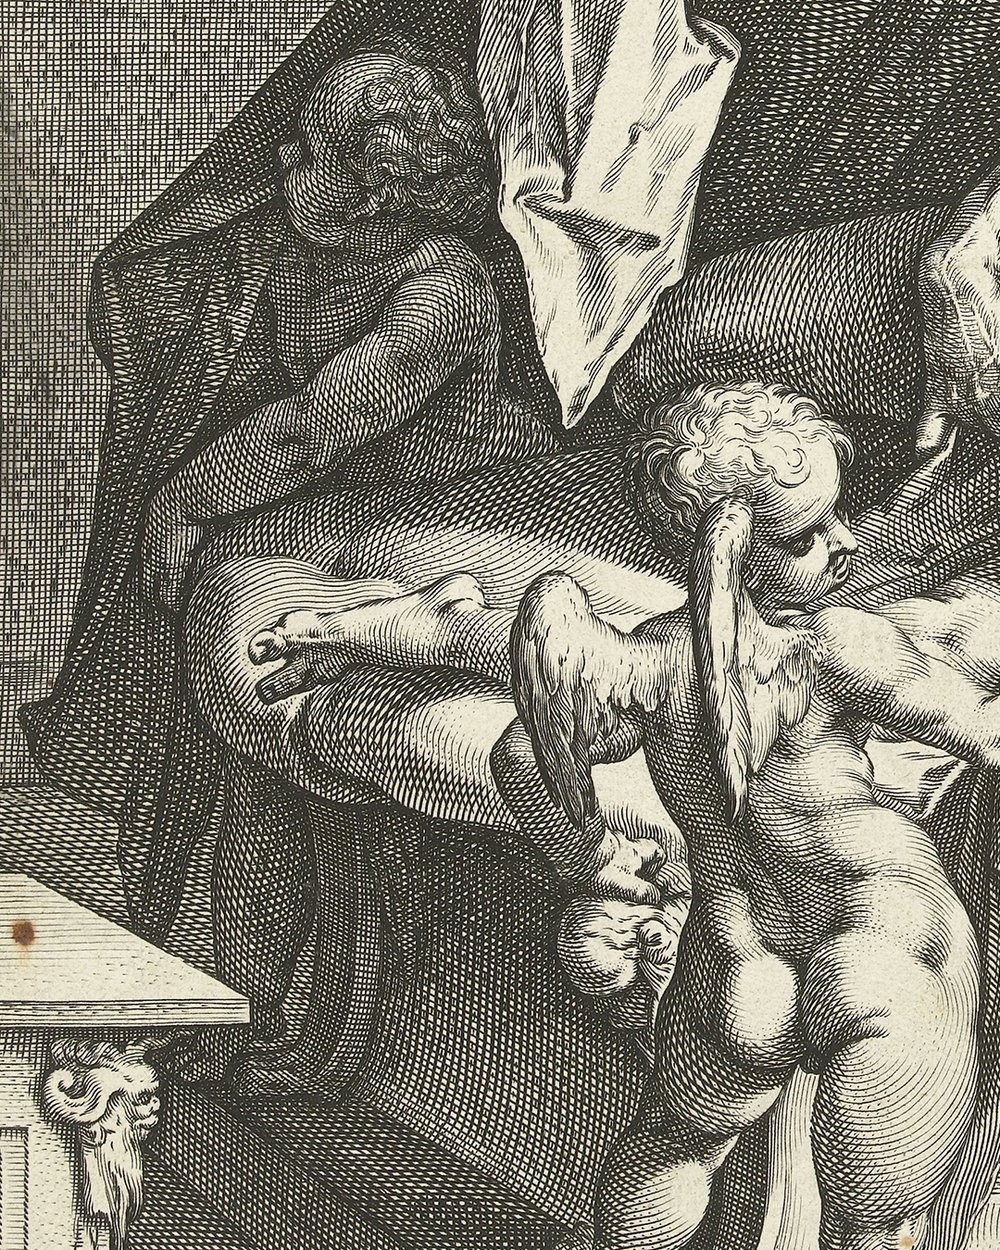 Hendrick Goltzius (1582)